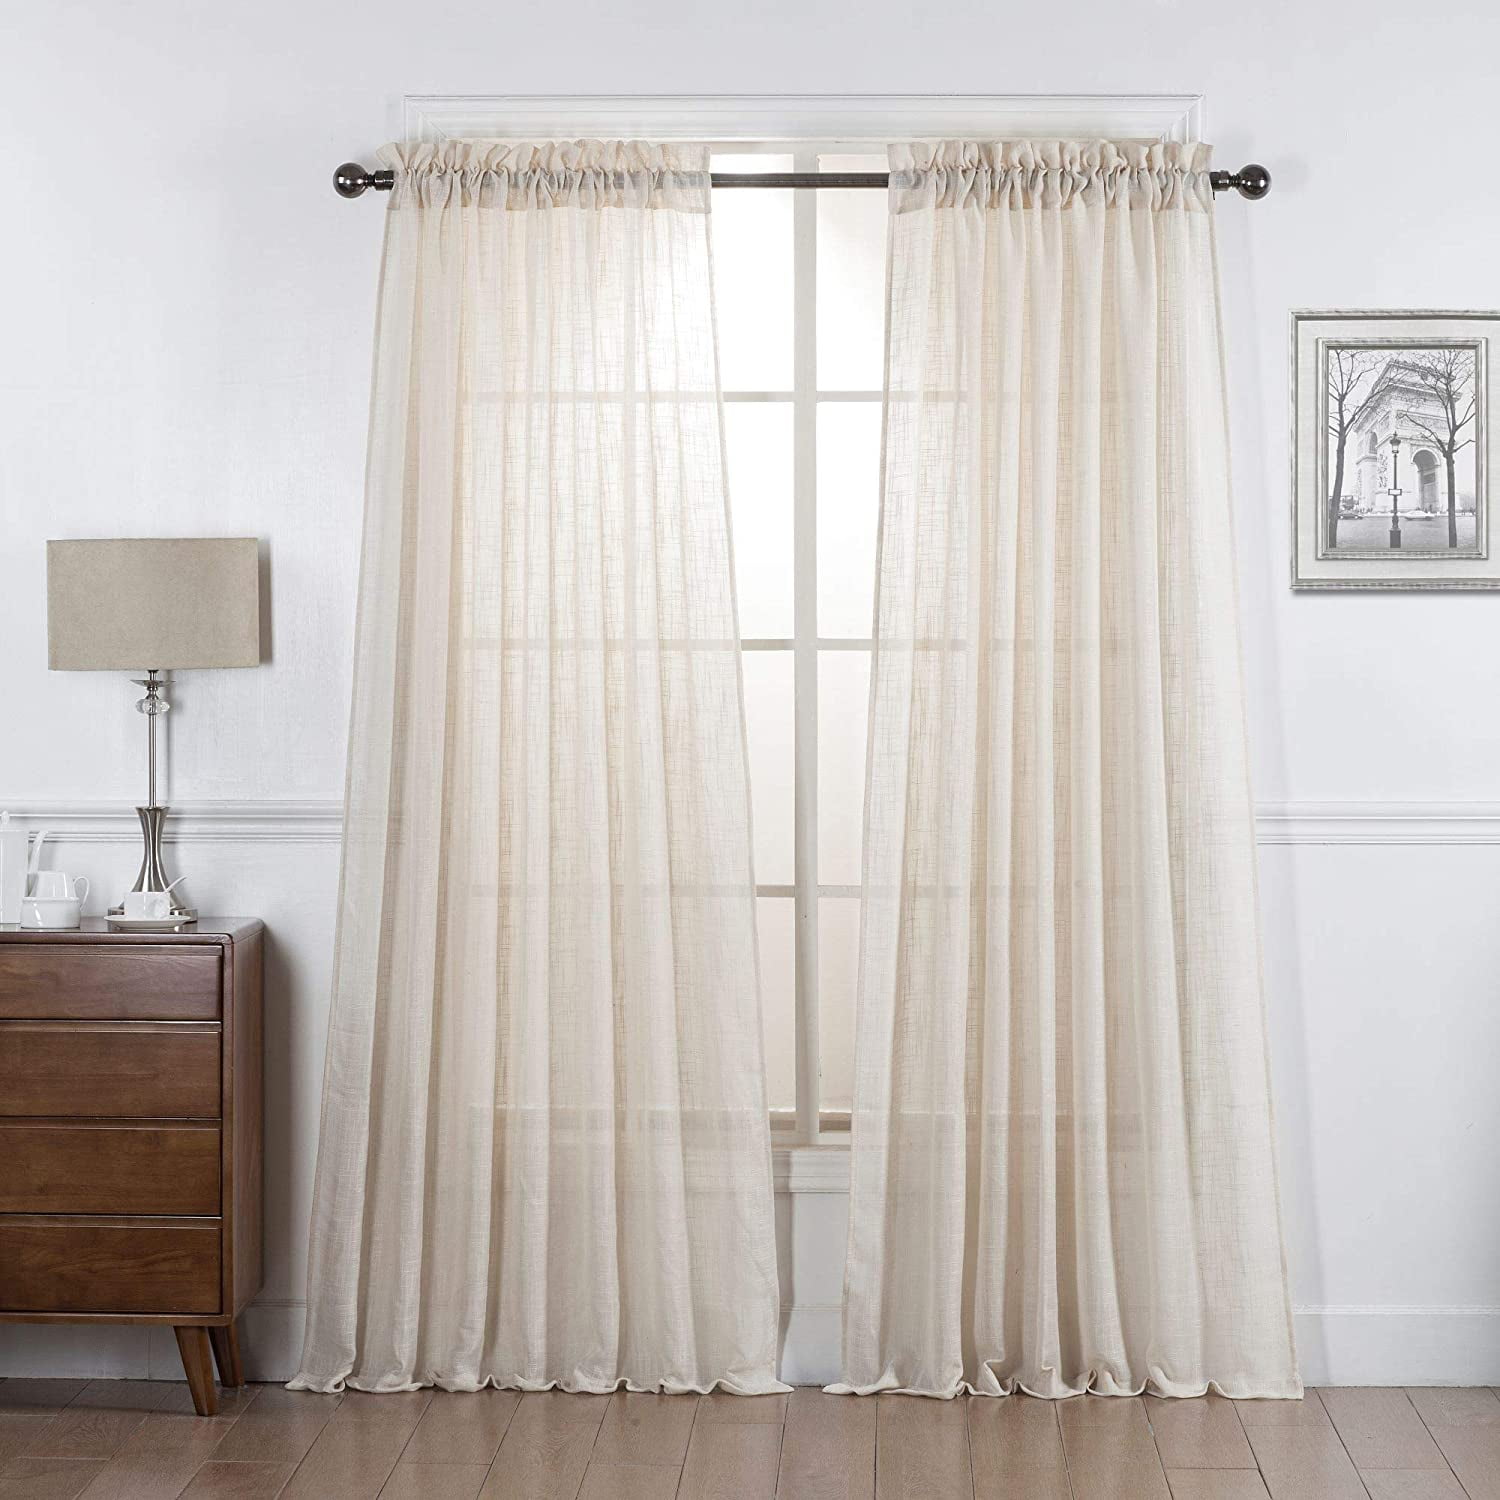 Set of 2 Piece Linen Textured Semi-Sheer Rod Pocket Curtain Panels (84